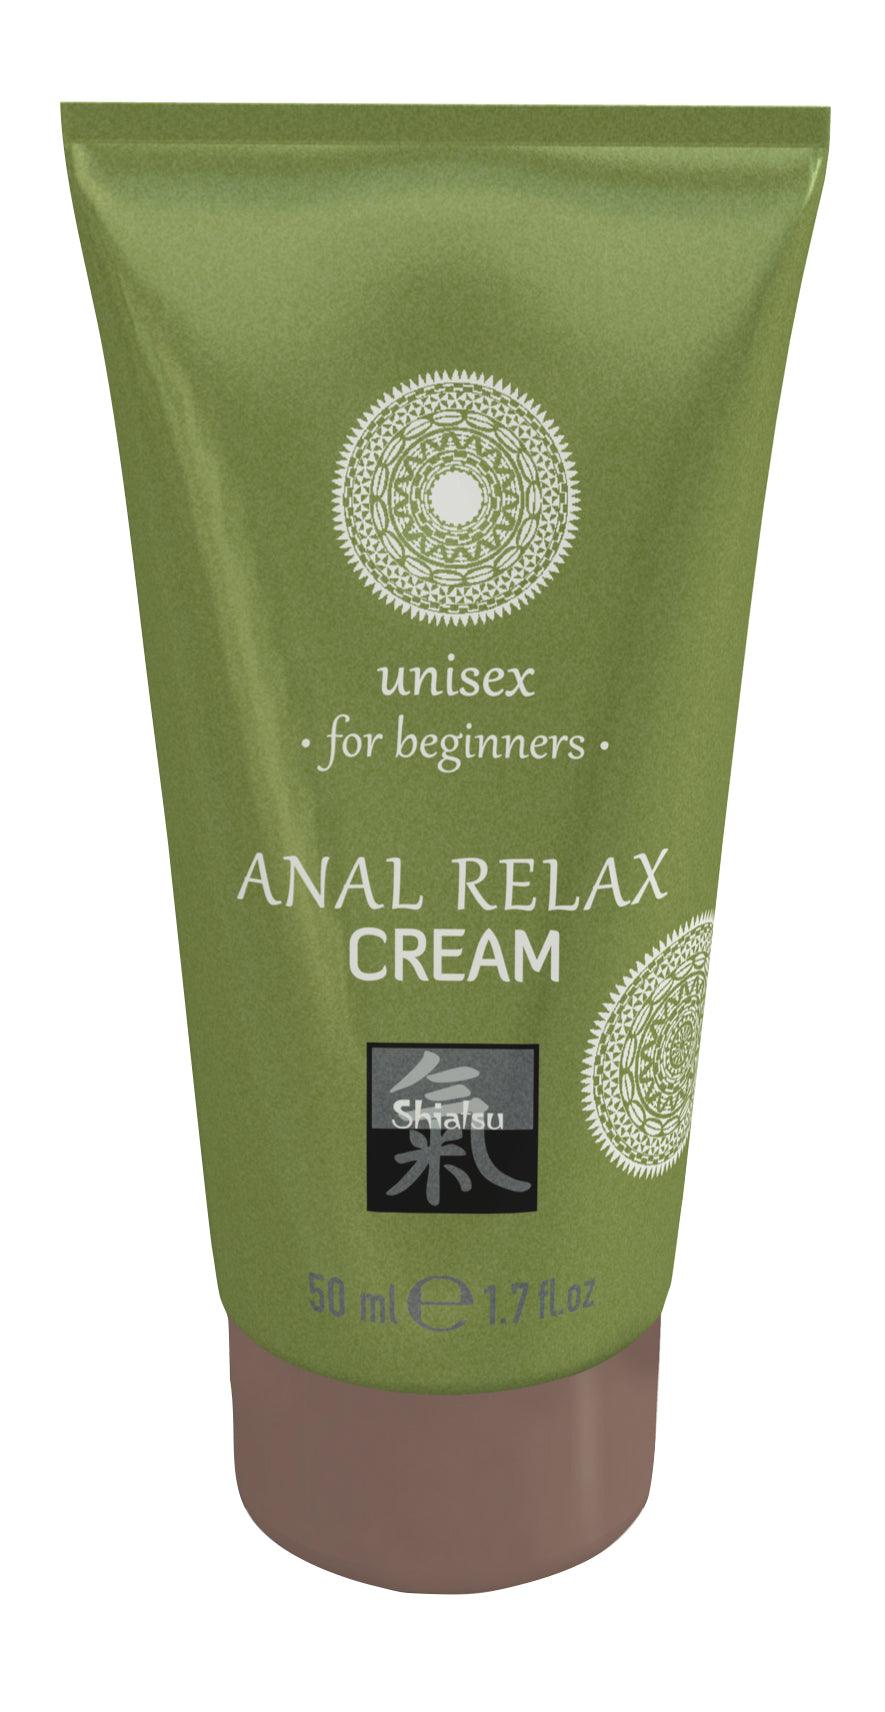 Shiatsu Anal Relax Cream Beginners 50ml - Take A Peek